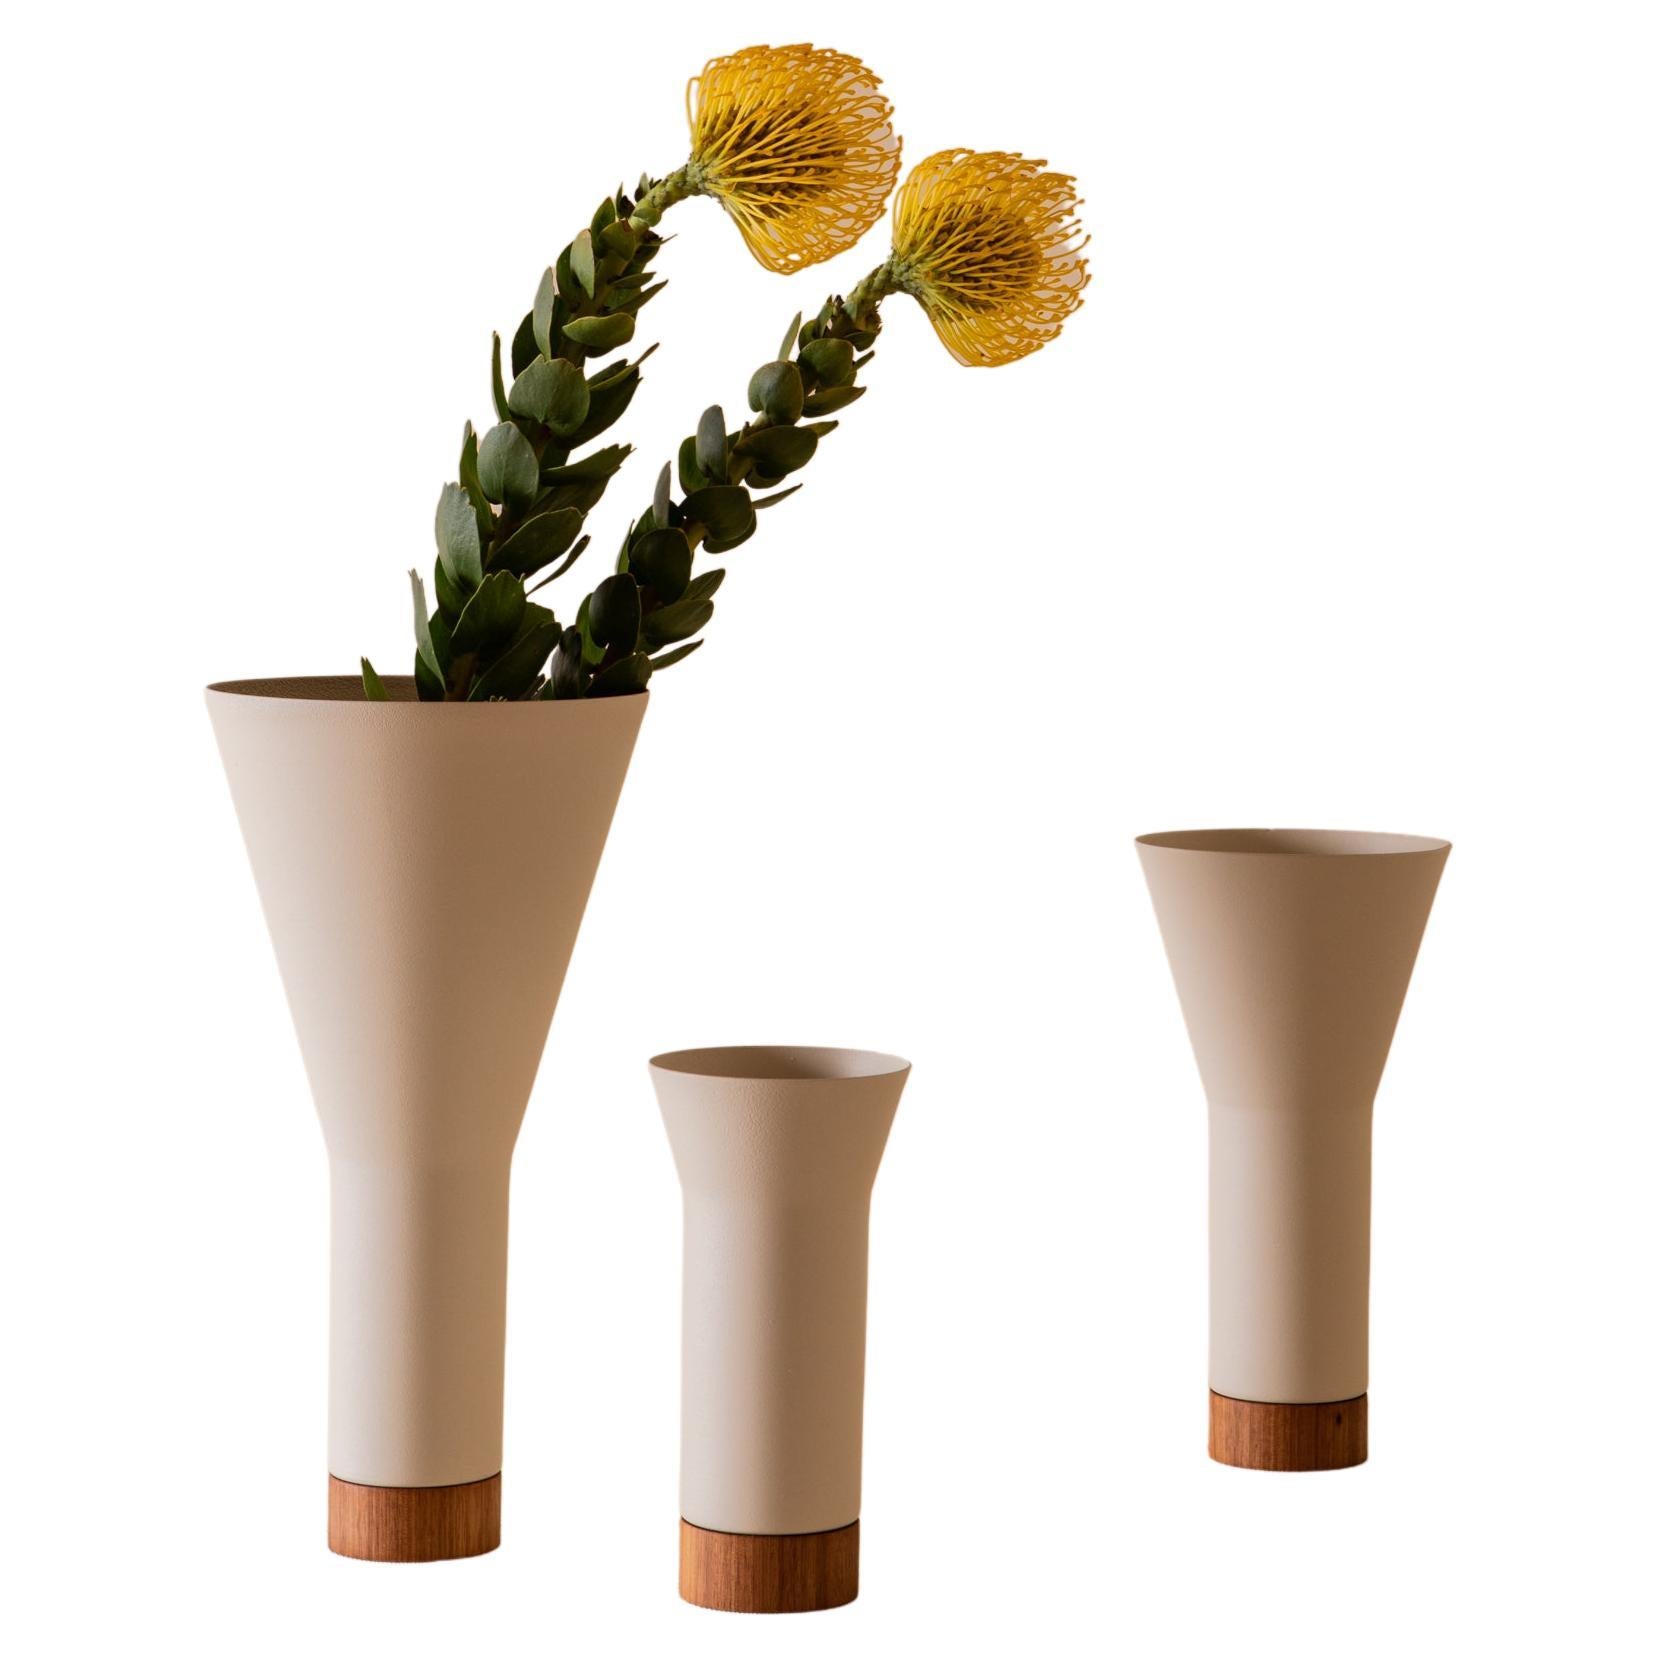 Farol Vases (Set of 3) by Estúdio Dentro, Brazilian Contemporary Design For Sale